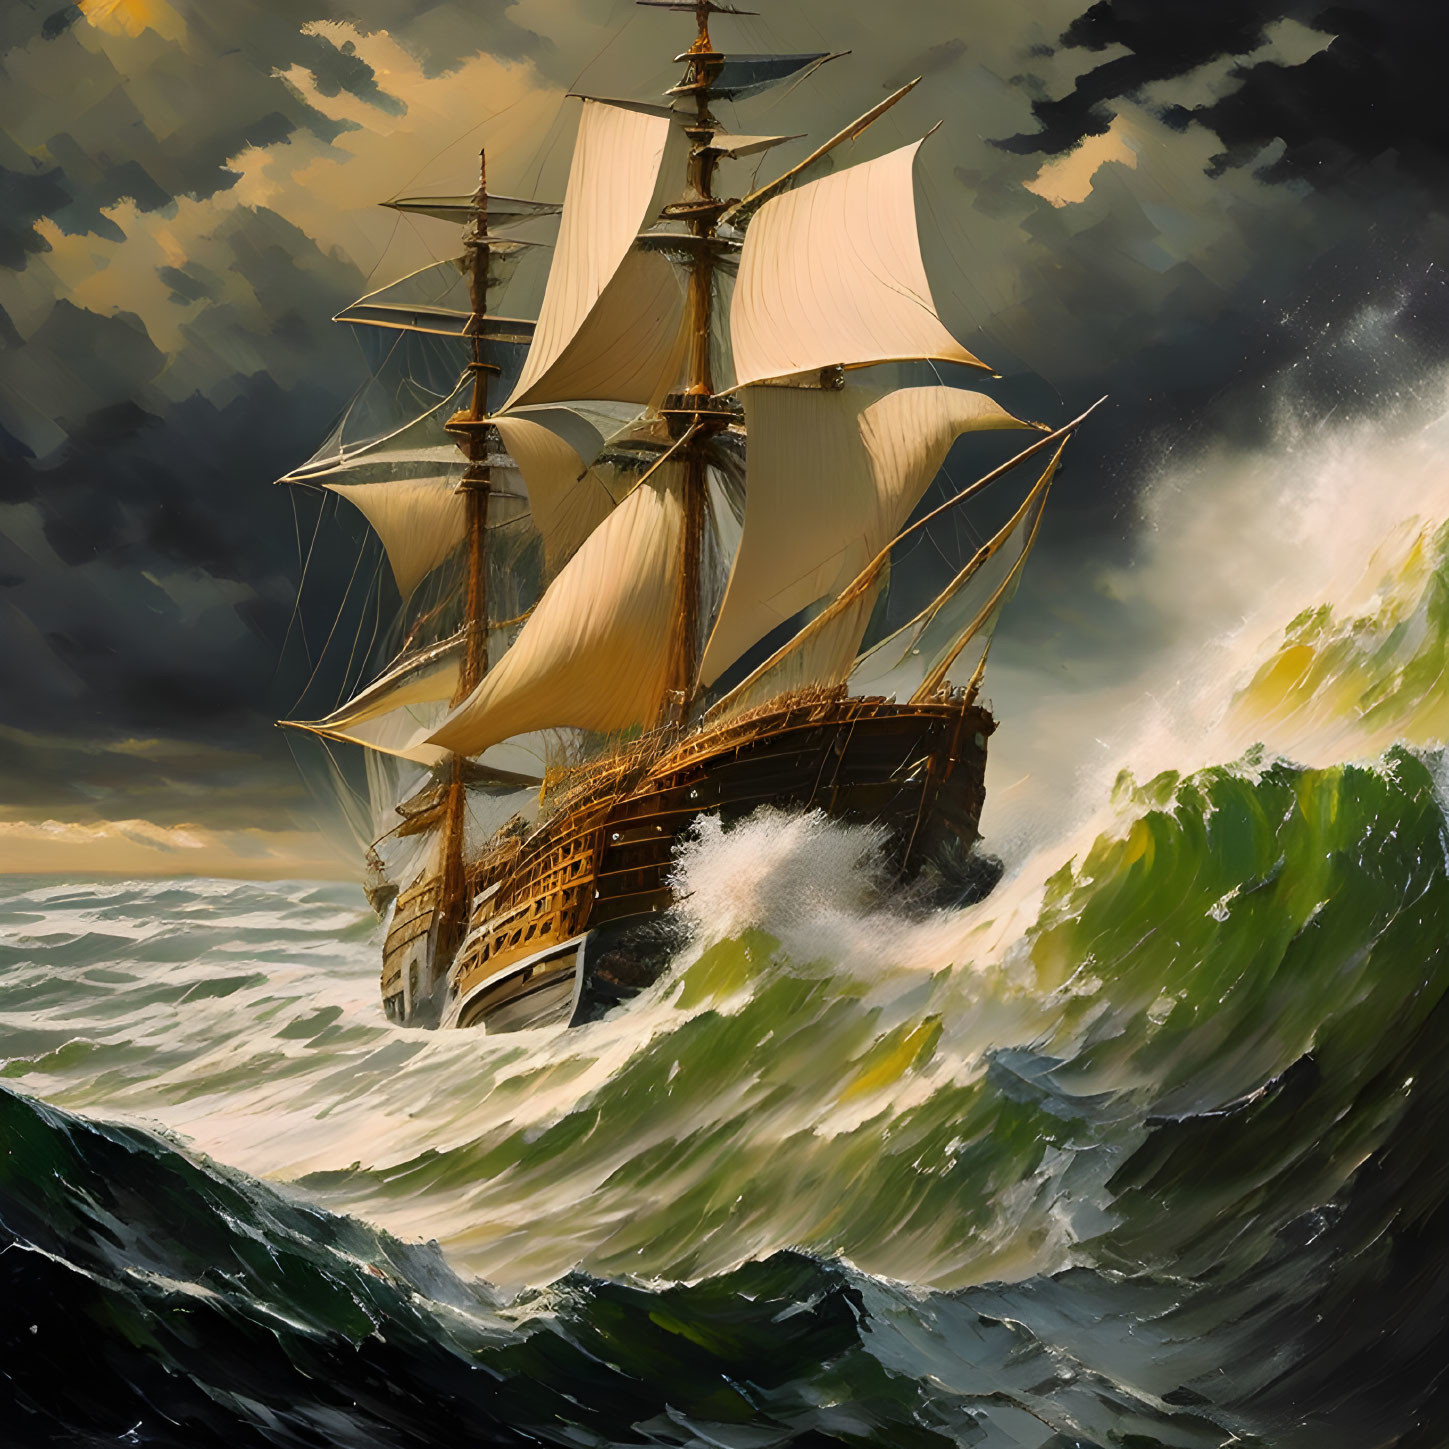 Majestic sailing ship navigating stormy seas